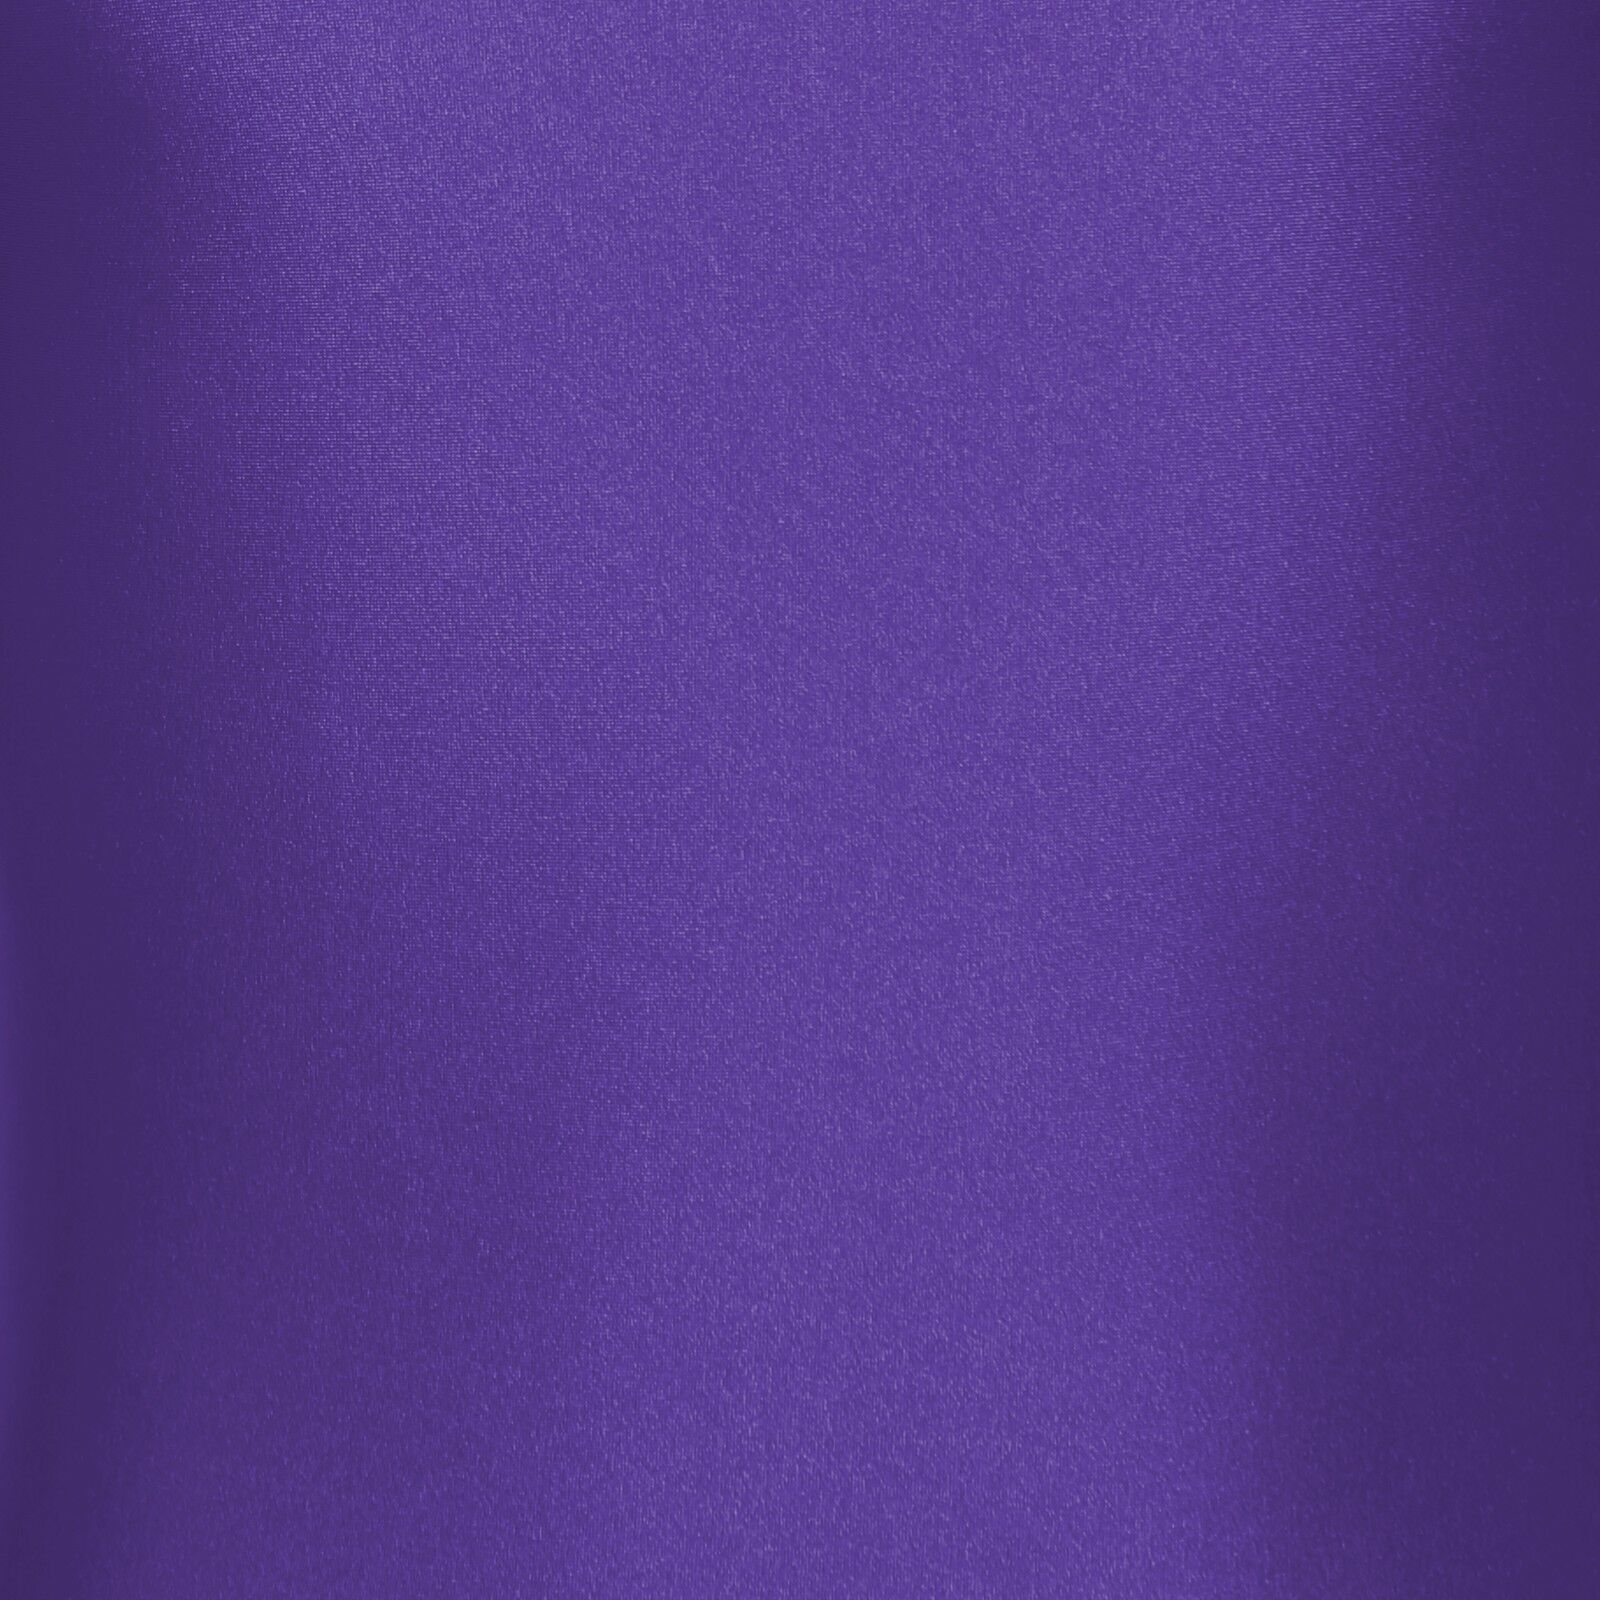 School Uniform of Kids Girls Leotard Long Sleeve Sports Gymnastics Ballet Dance -Purple